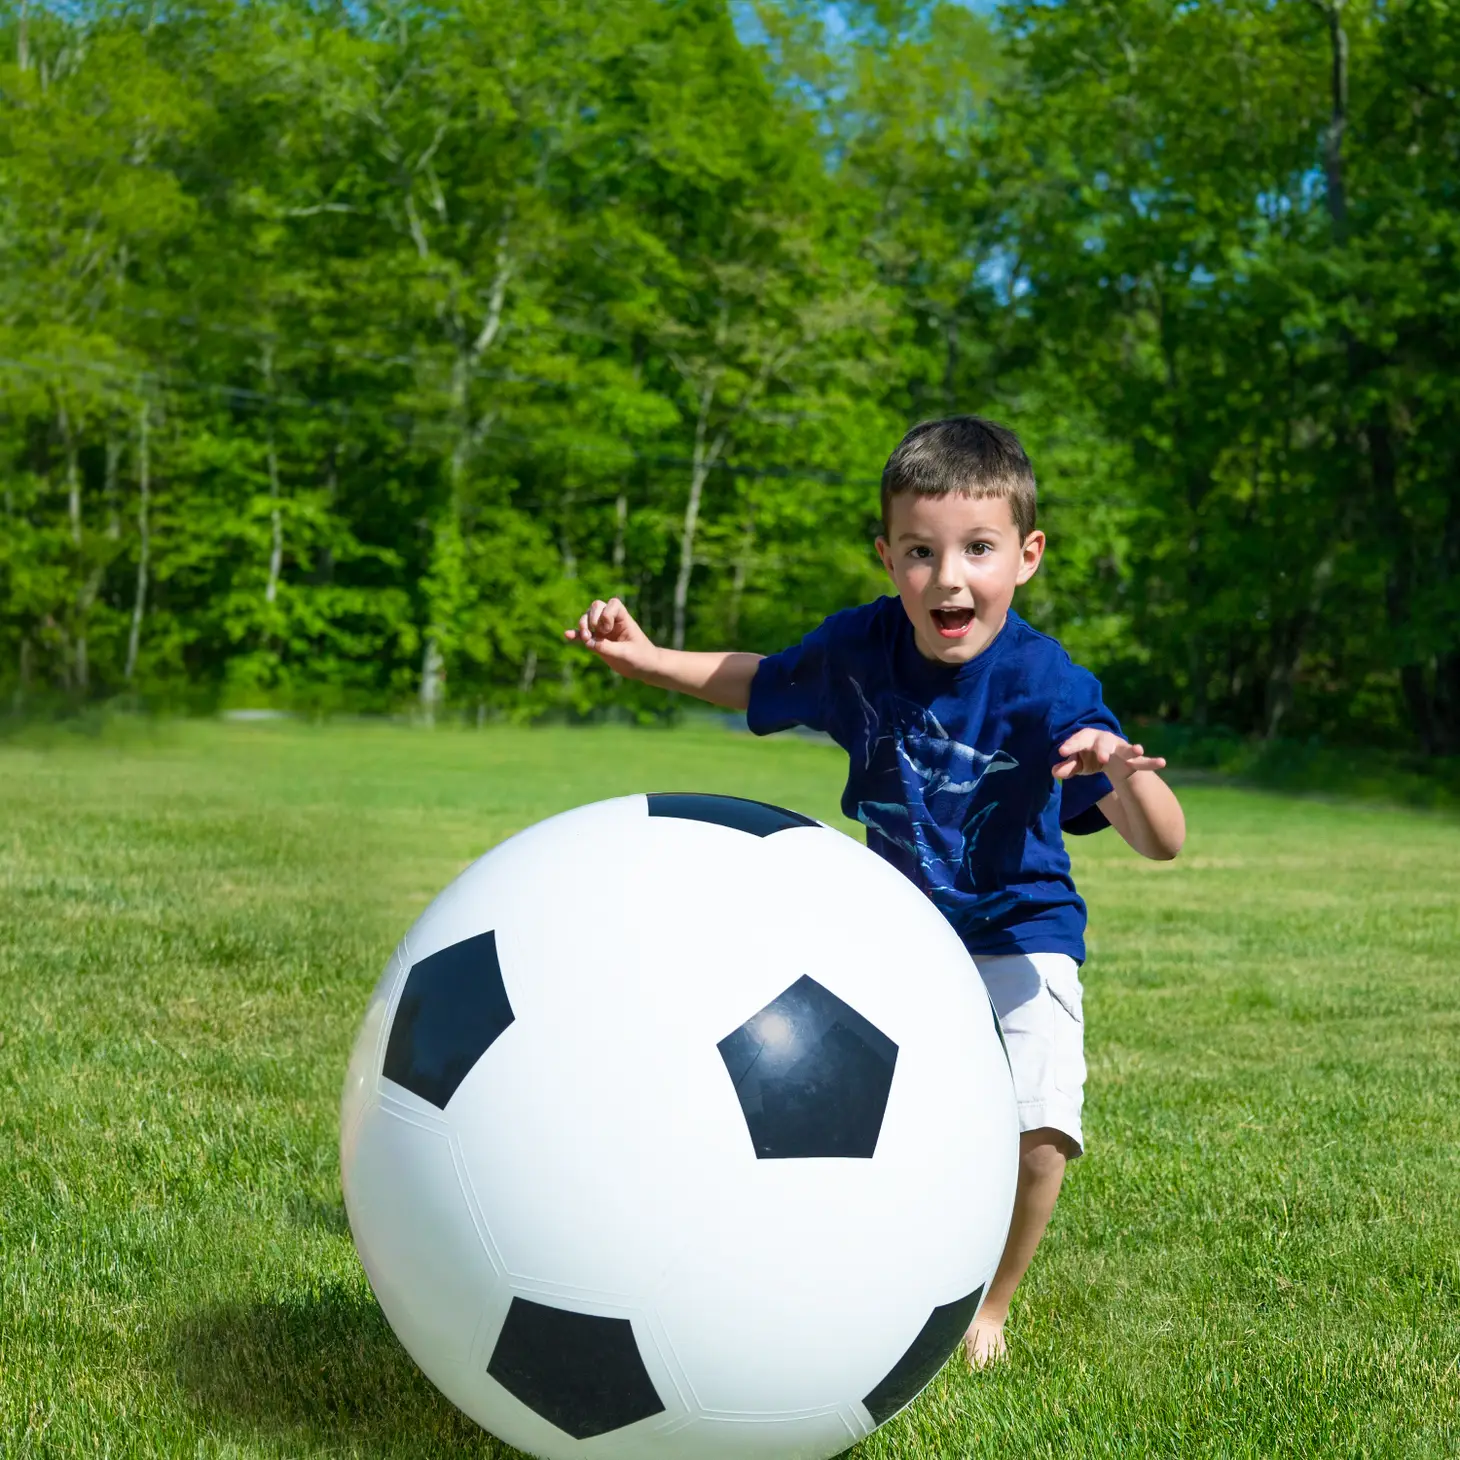 Mega-Sized Inflatable Soccer Ball